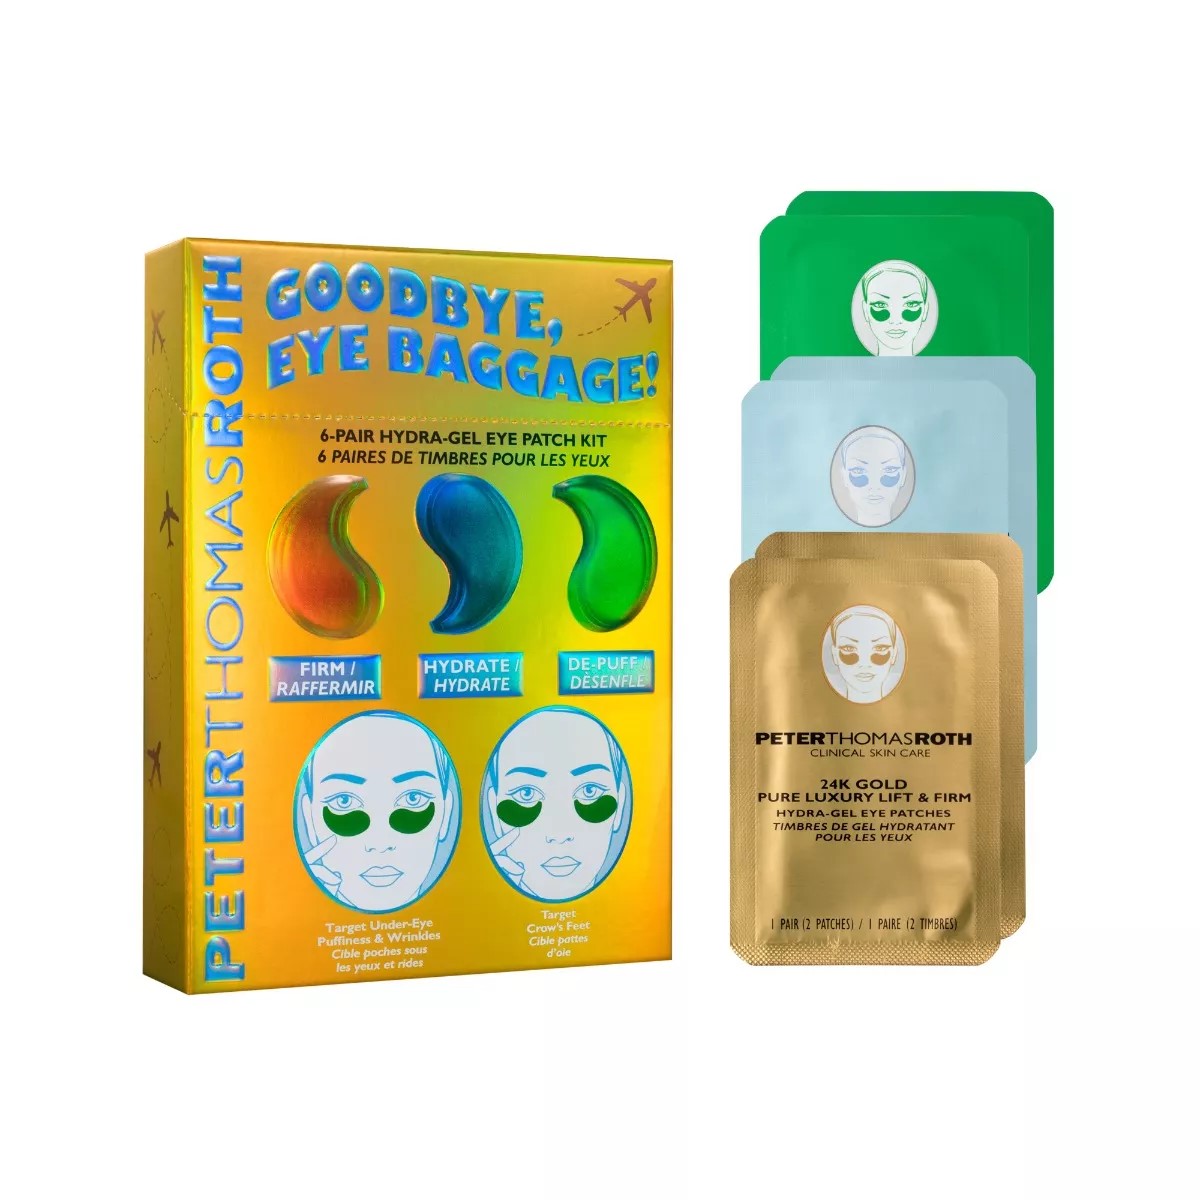 Peter Thomas Roth Goodbye, Eye Baggage! 6-Pair Hydra-Gel Eye Patch Kit 2023 - New , Sealed, in the Box